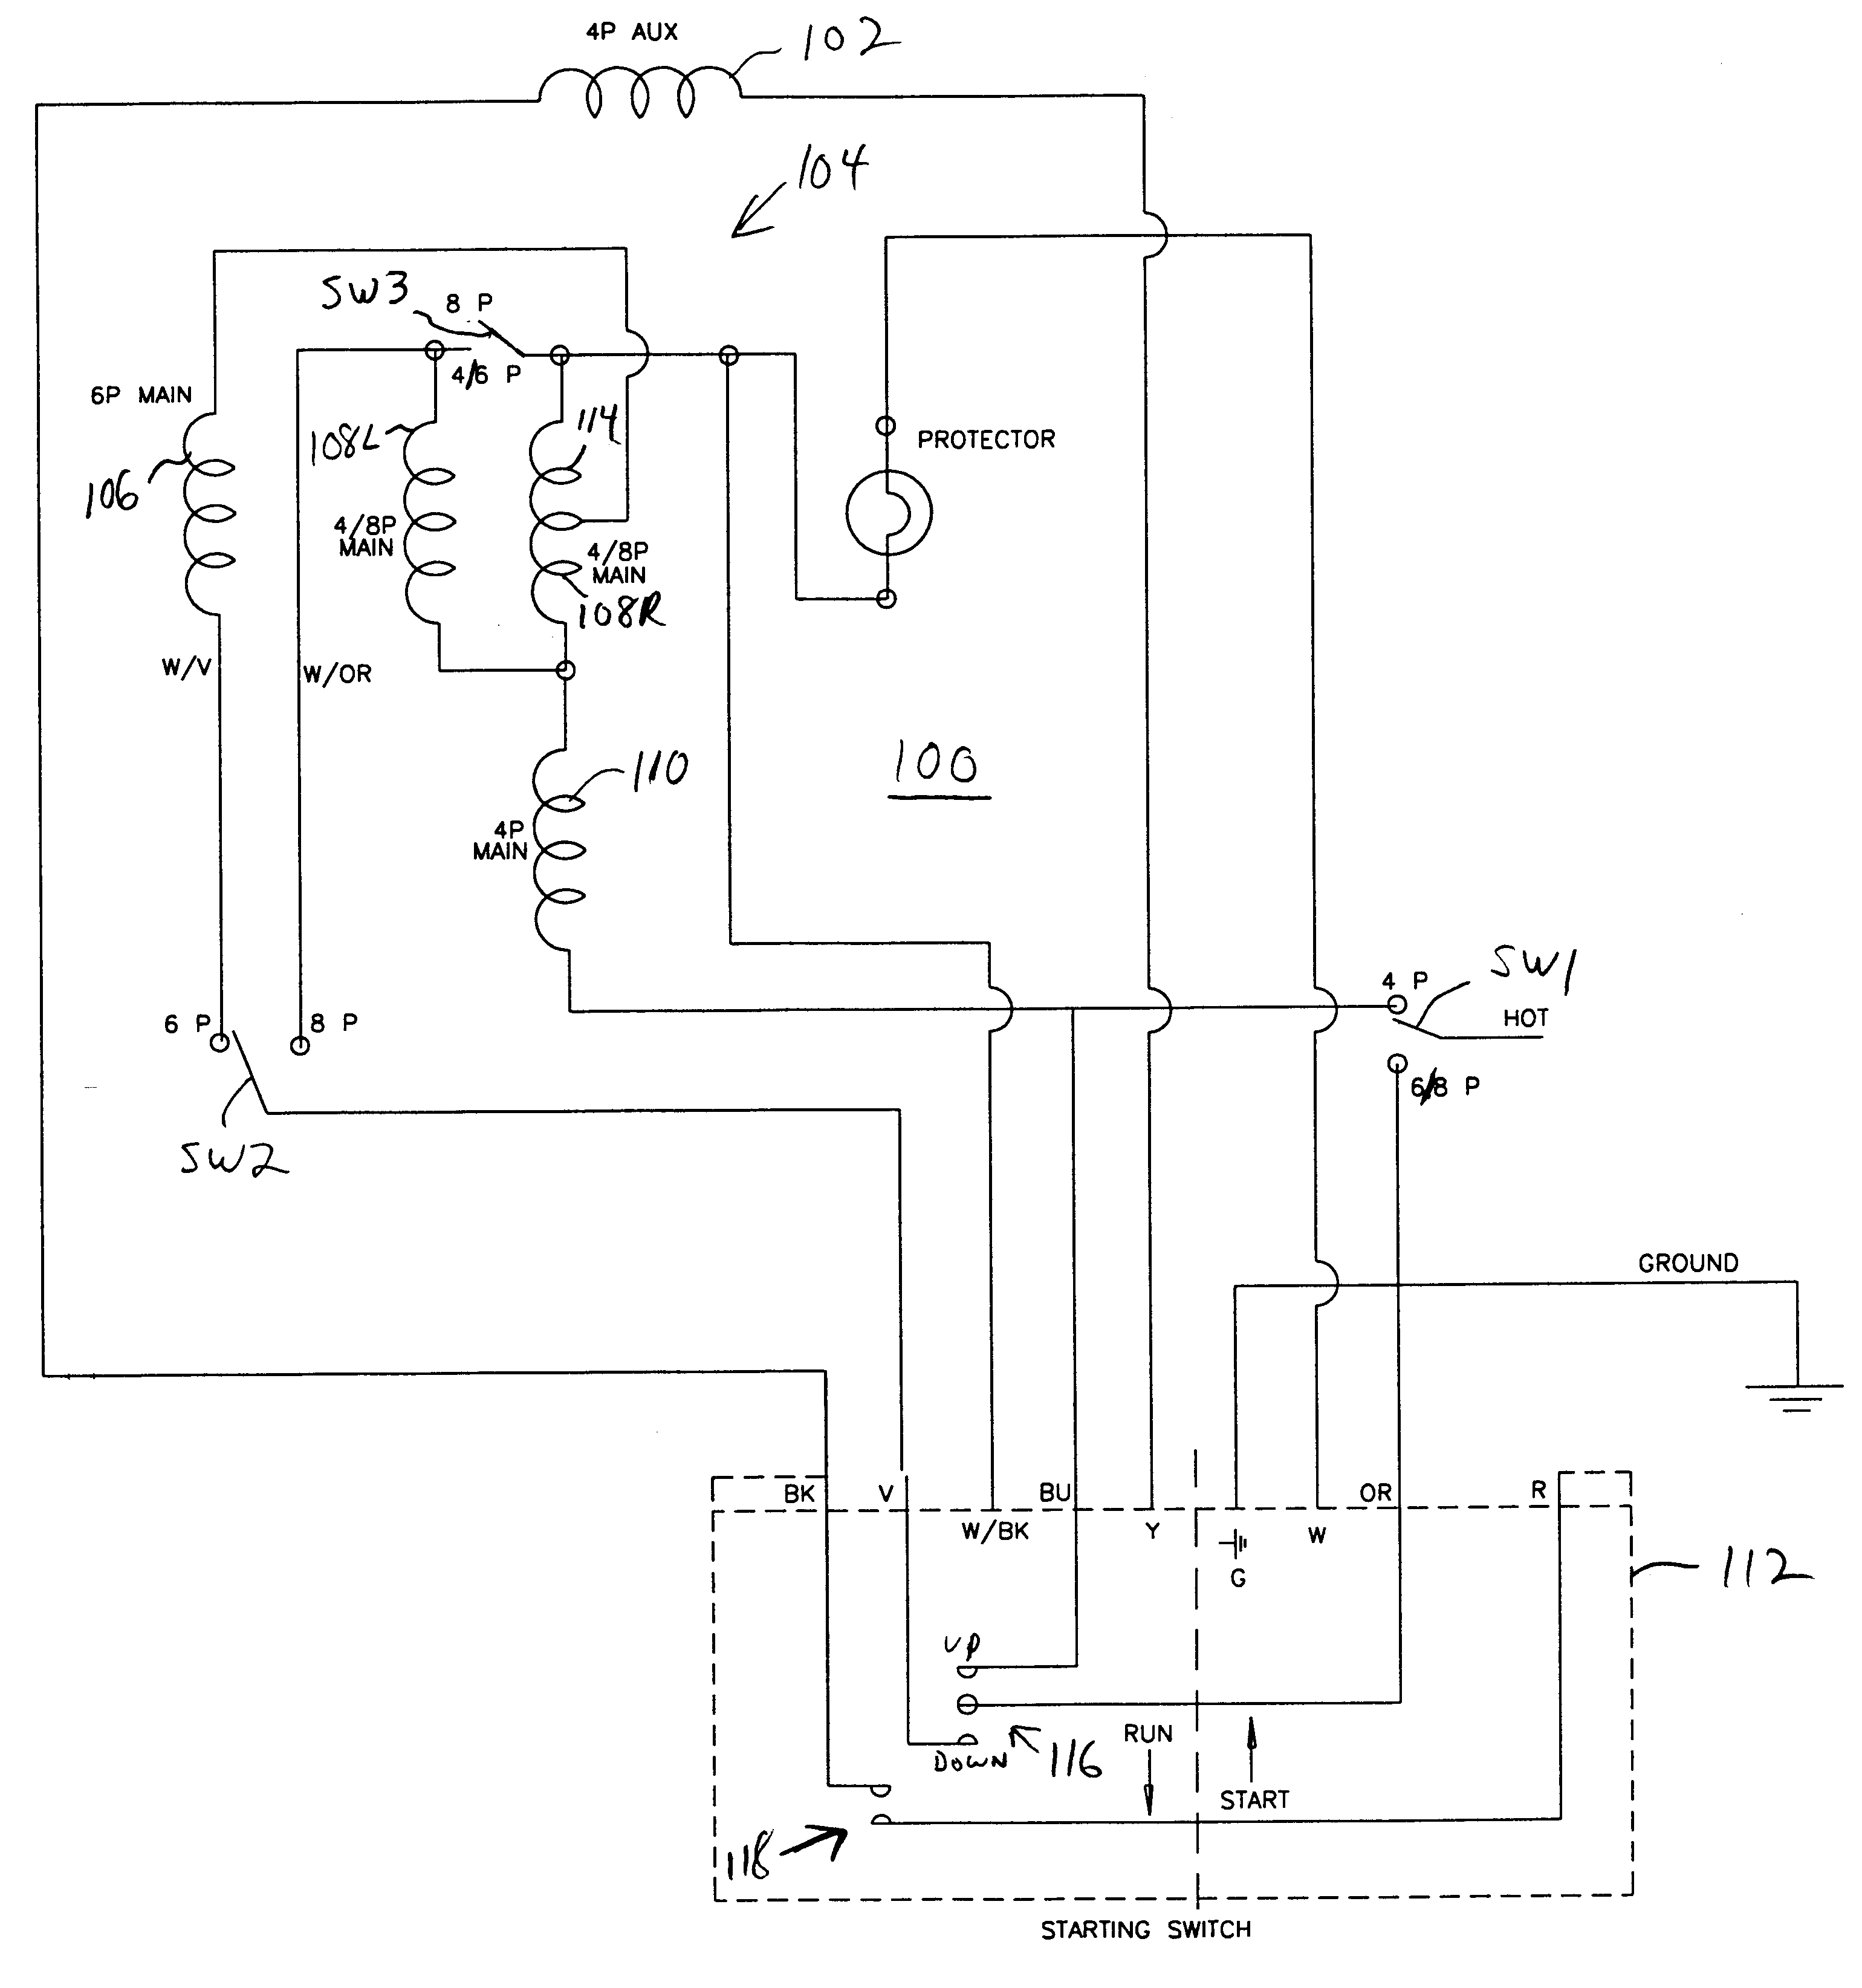 Century Furnace Parts Diagram | Wiring Diagram - Century Motor Wiring Diagram